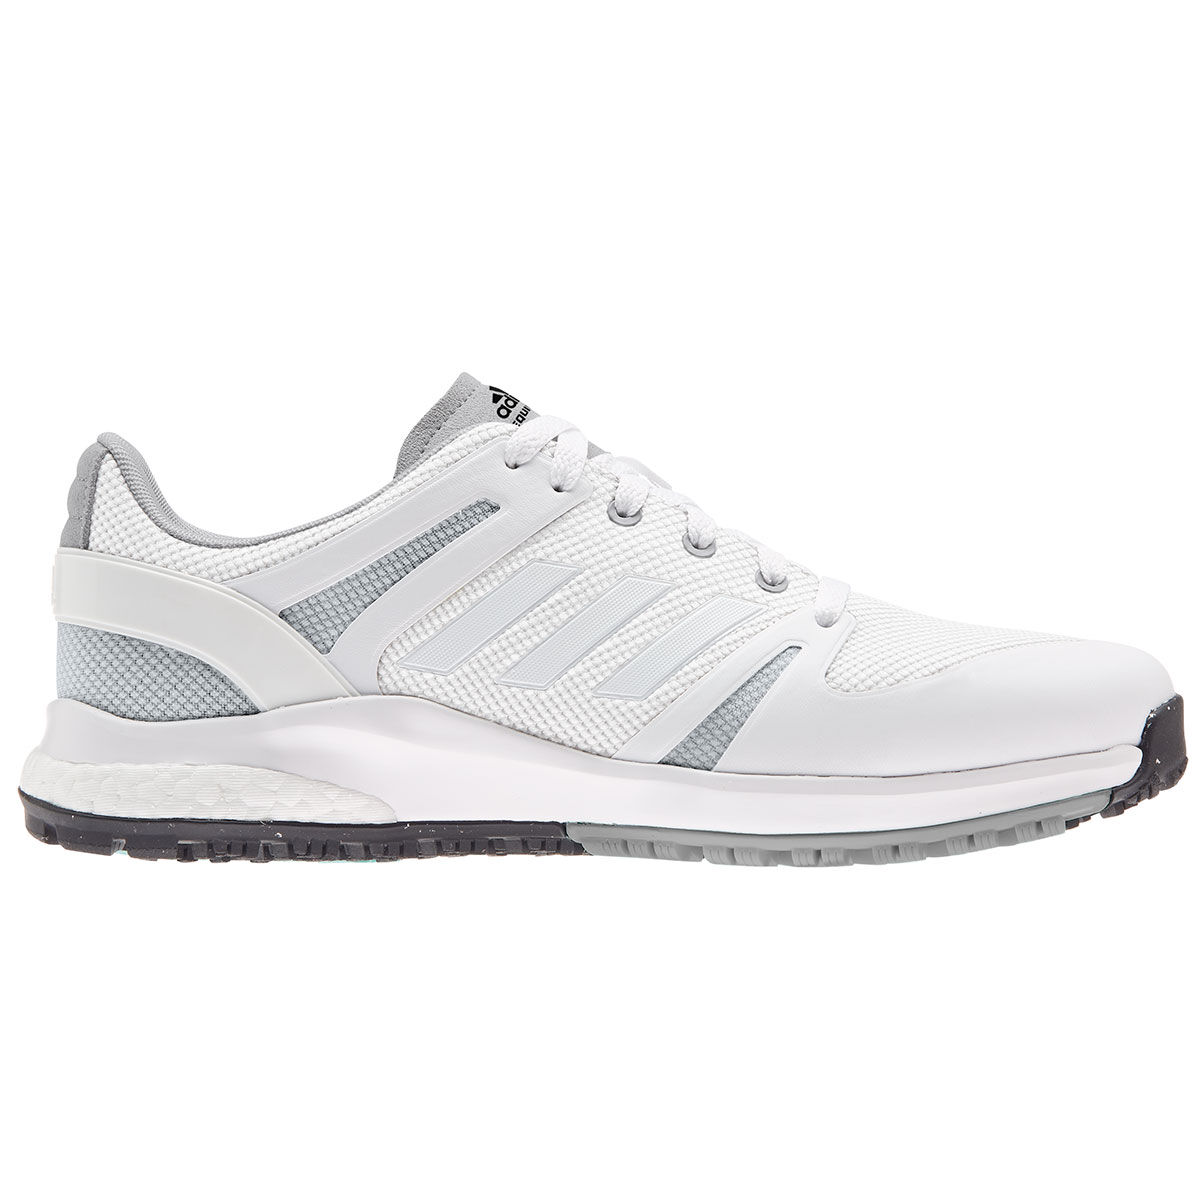 Chaussures adidas Golf EQT, homme, 7, White/white/grey | Online Golf